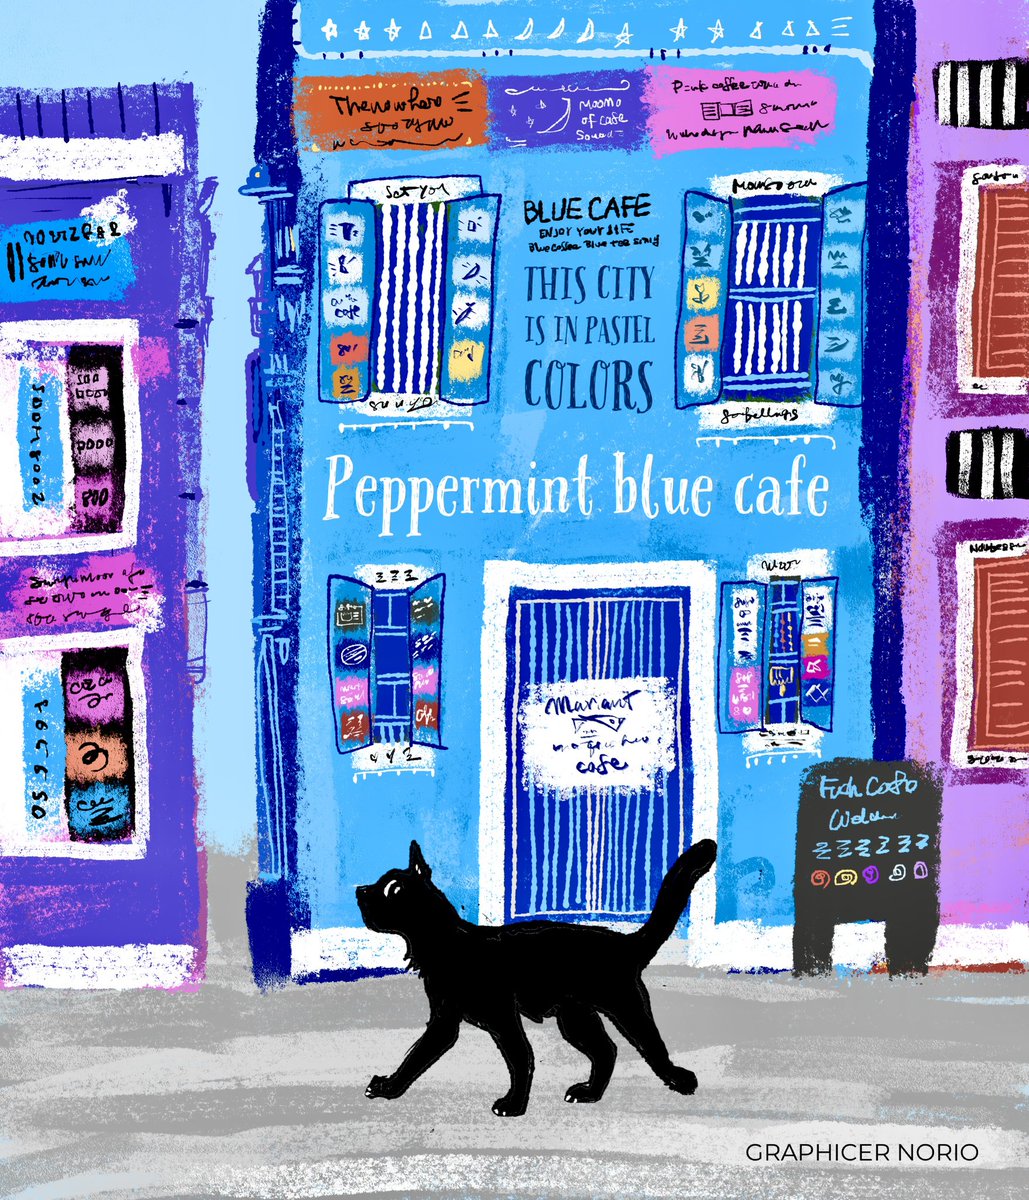 peppermint blue cafe
パステルカラー通りを散歩する猫
#illustlation #drawing #illusrtationart 
#picturebook #childrensbook #artwork 
#graphicart #artdirector #CatsLover 
#猫好き #絵本 #pastelcolors